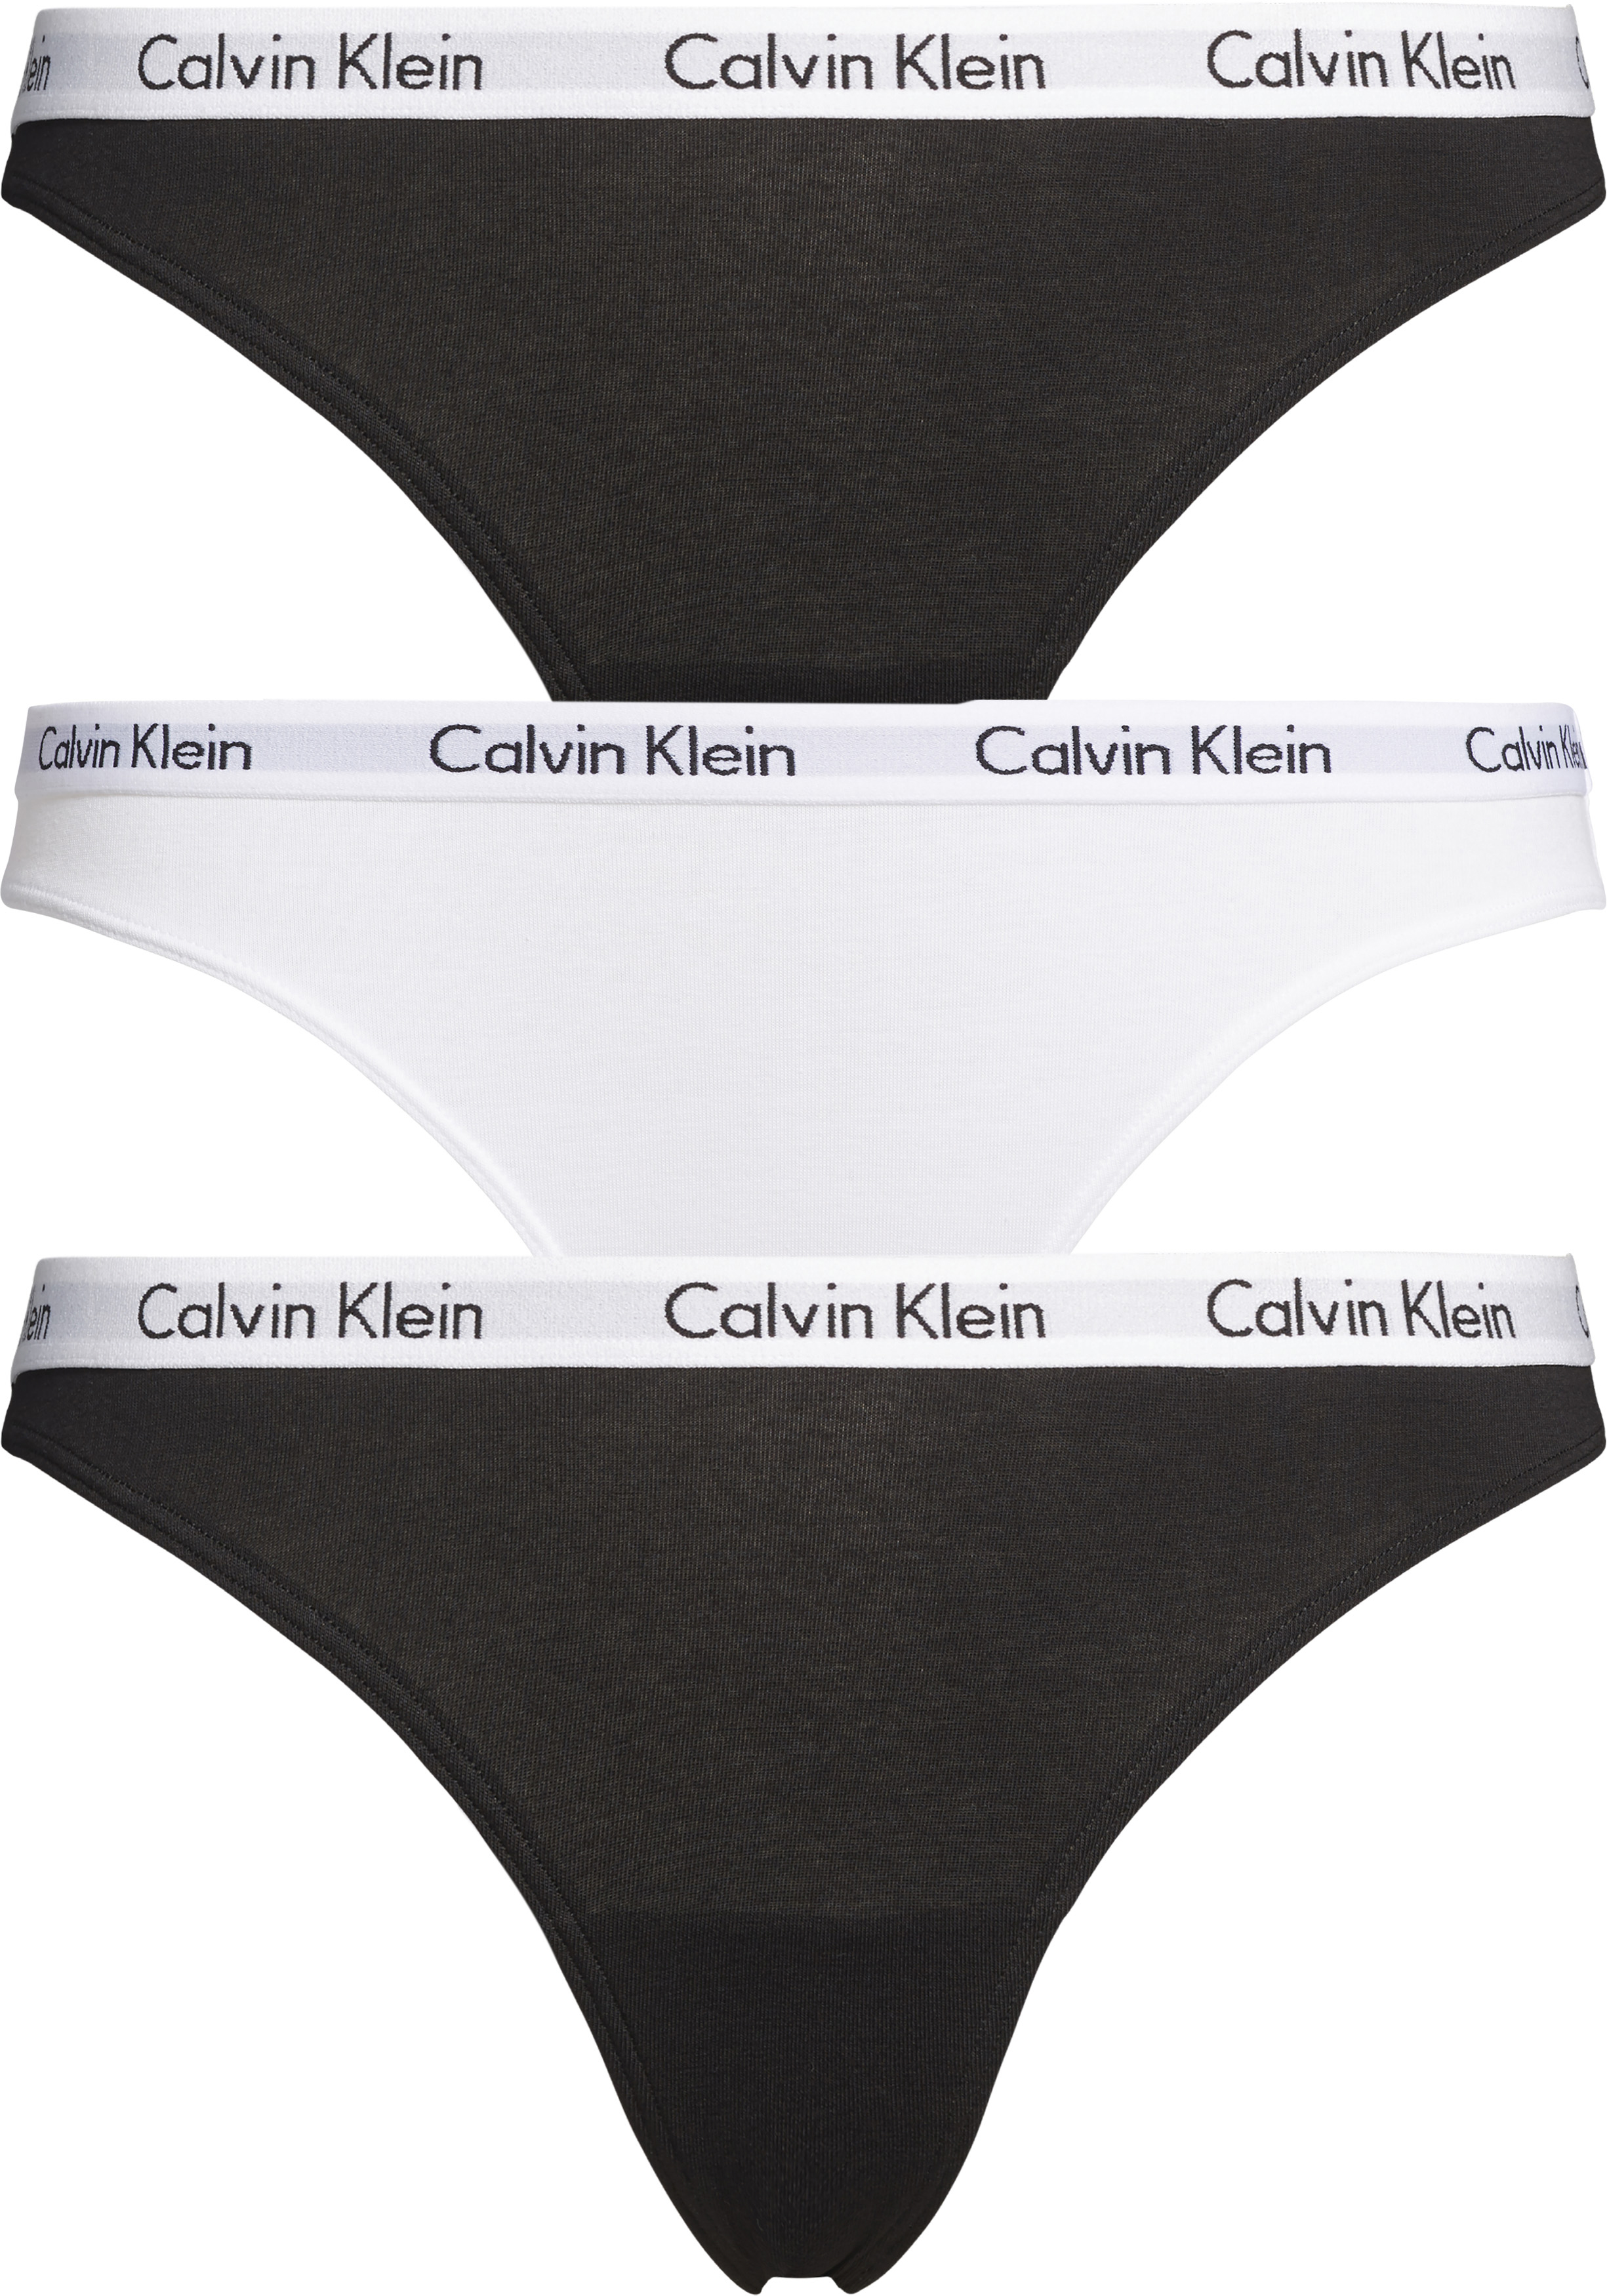 Bloody vervorming seinpaal Calvin Klein dames strings (3-pack), zwart, wit, zwart - Zomer SALE tot 50%  korting